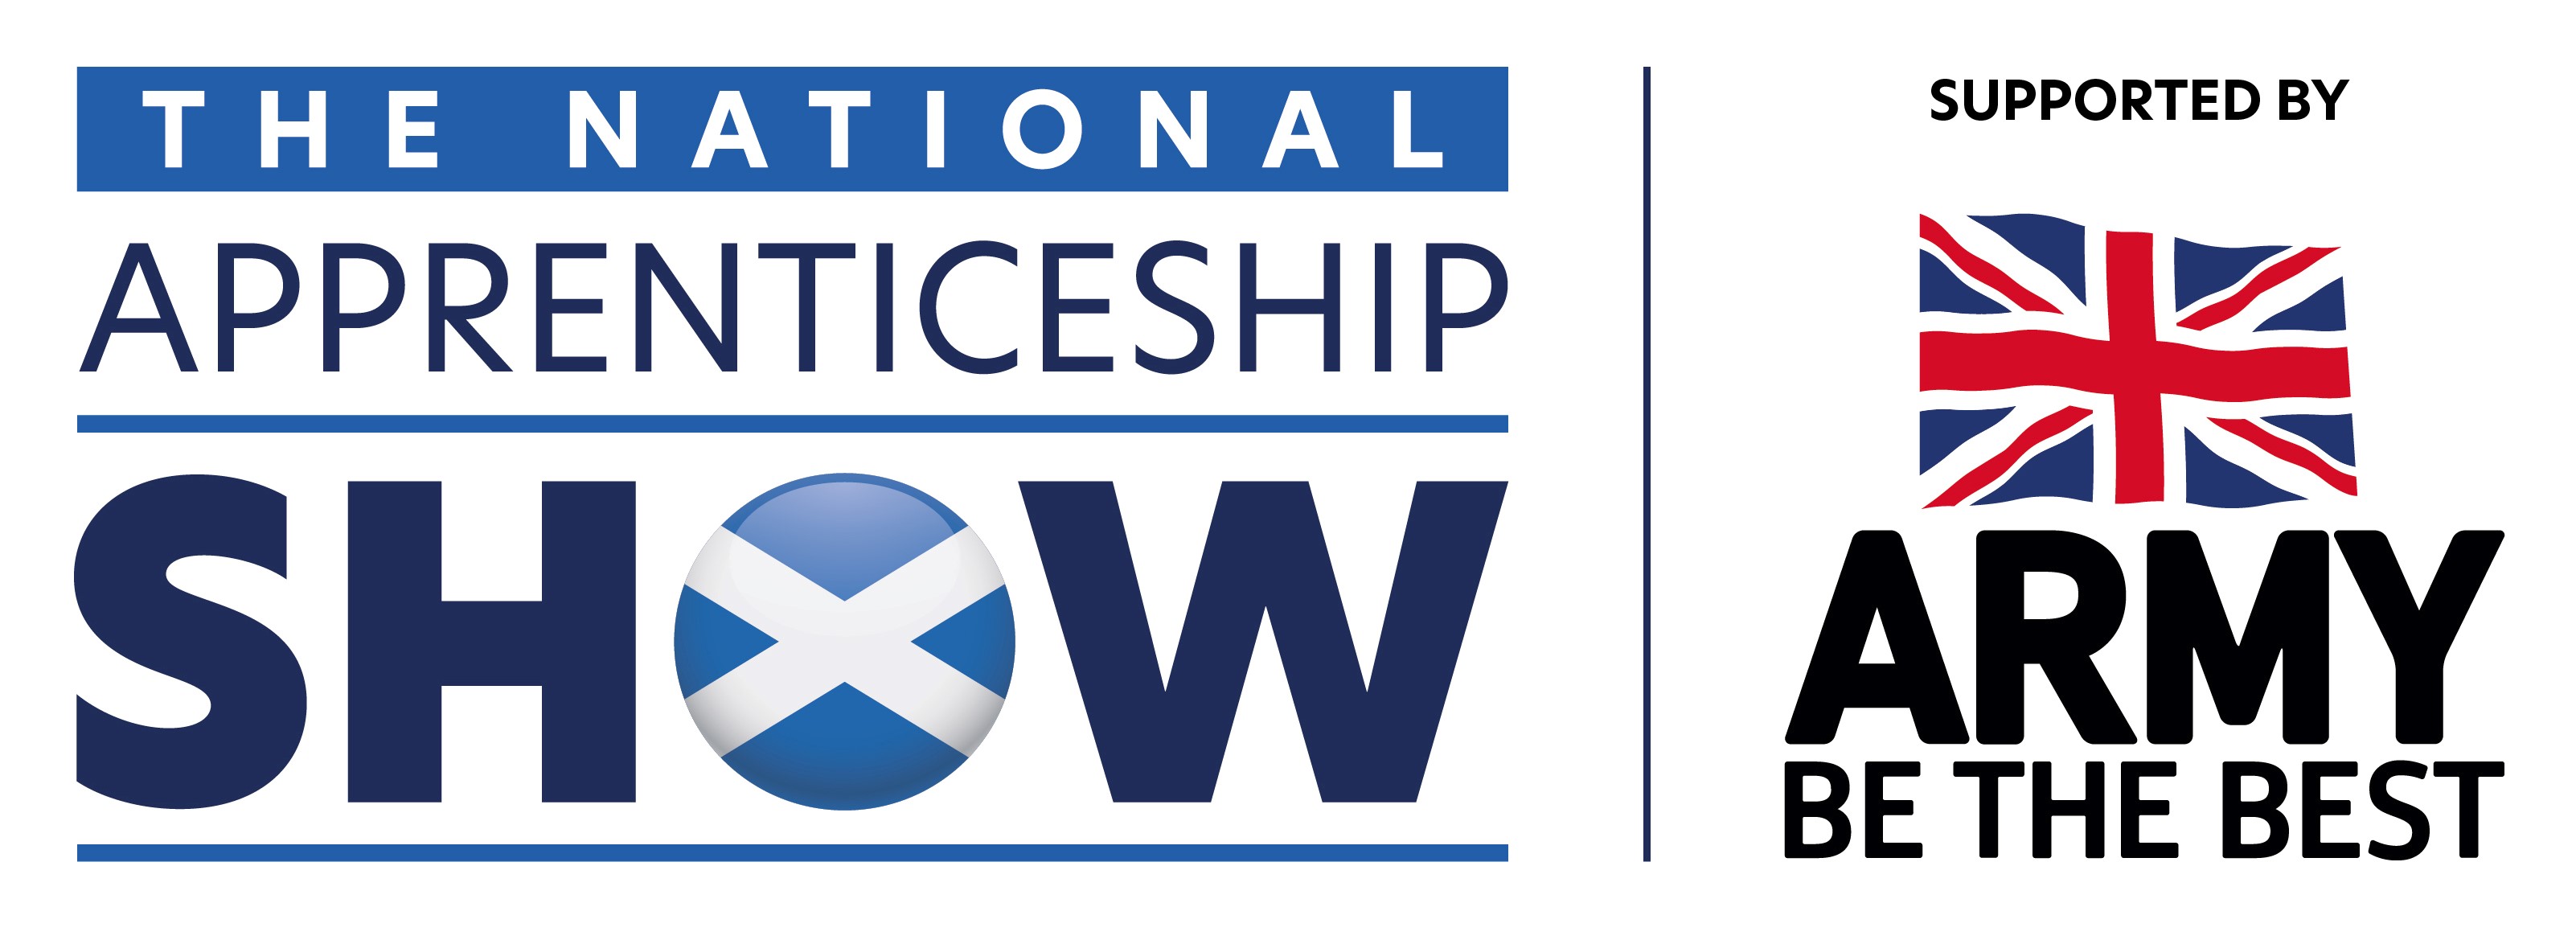 National Apprenticeship Show Scotland